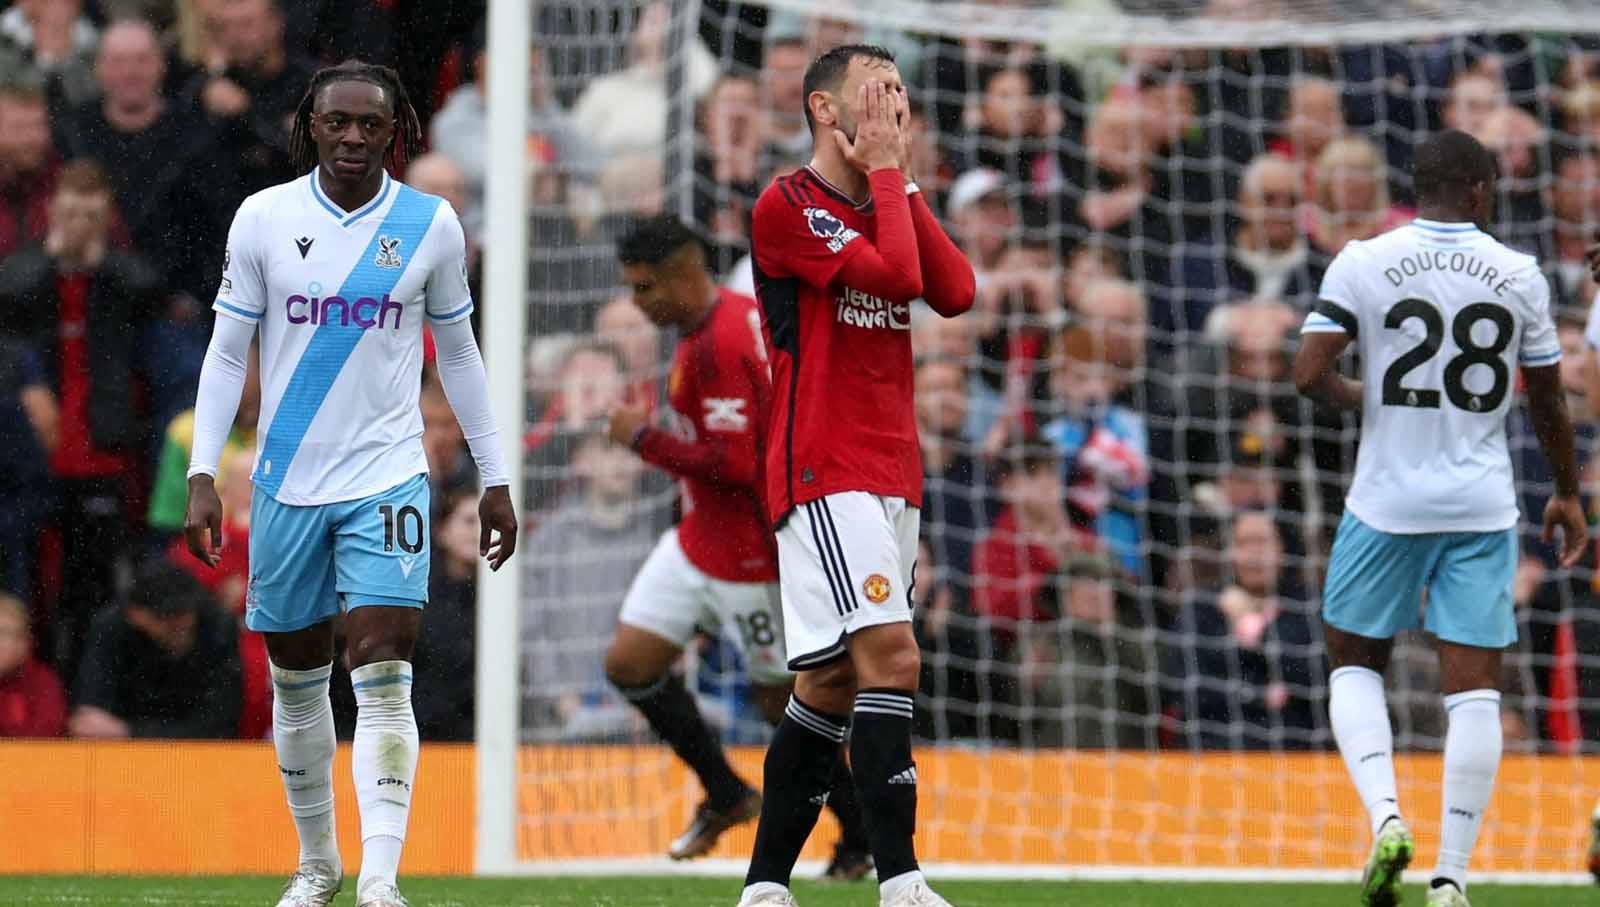 Reaksi pemain Manchester United Bruno Fernandes sangat kecewa usai timnya kebobolan gawang. (Foto: REUTERS/Russell Cheyne)